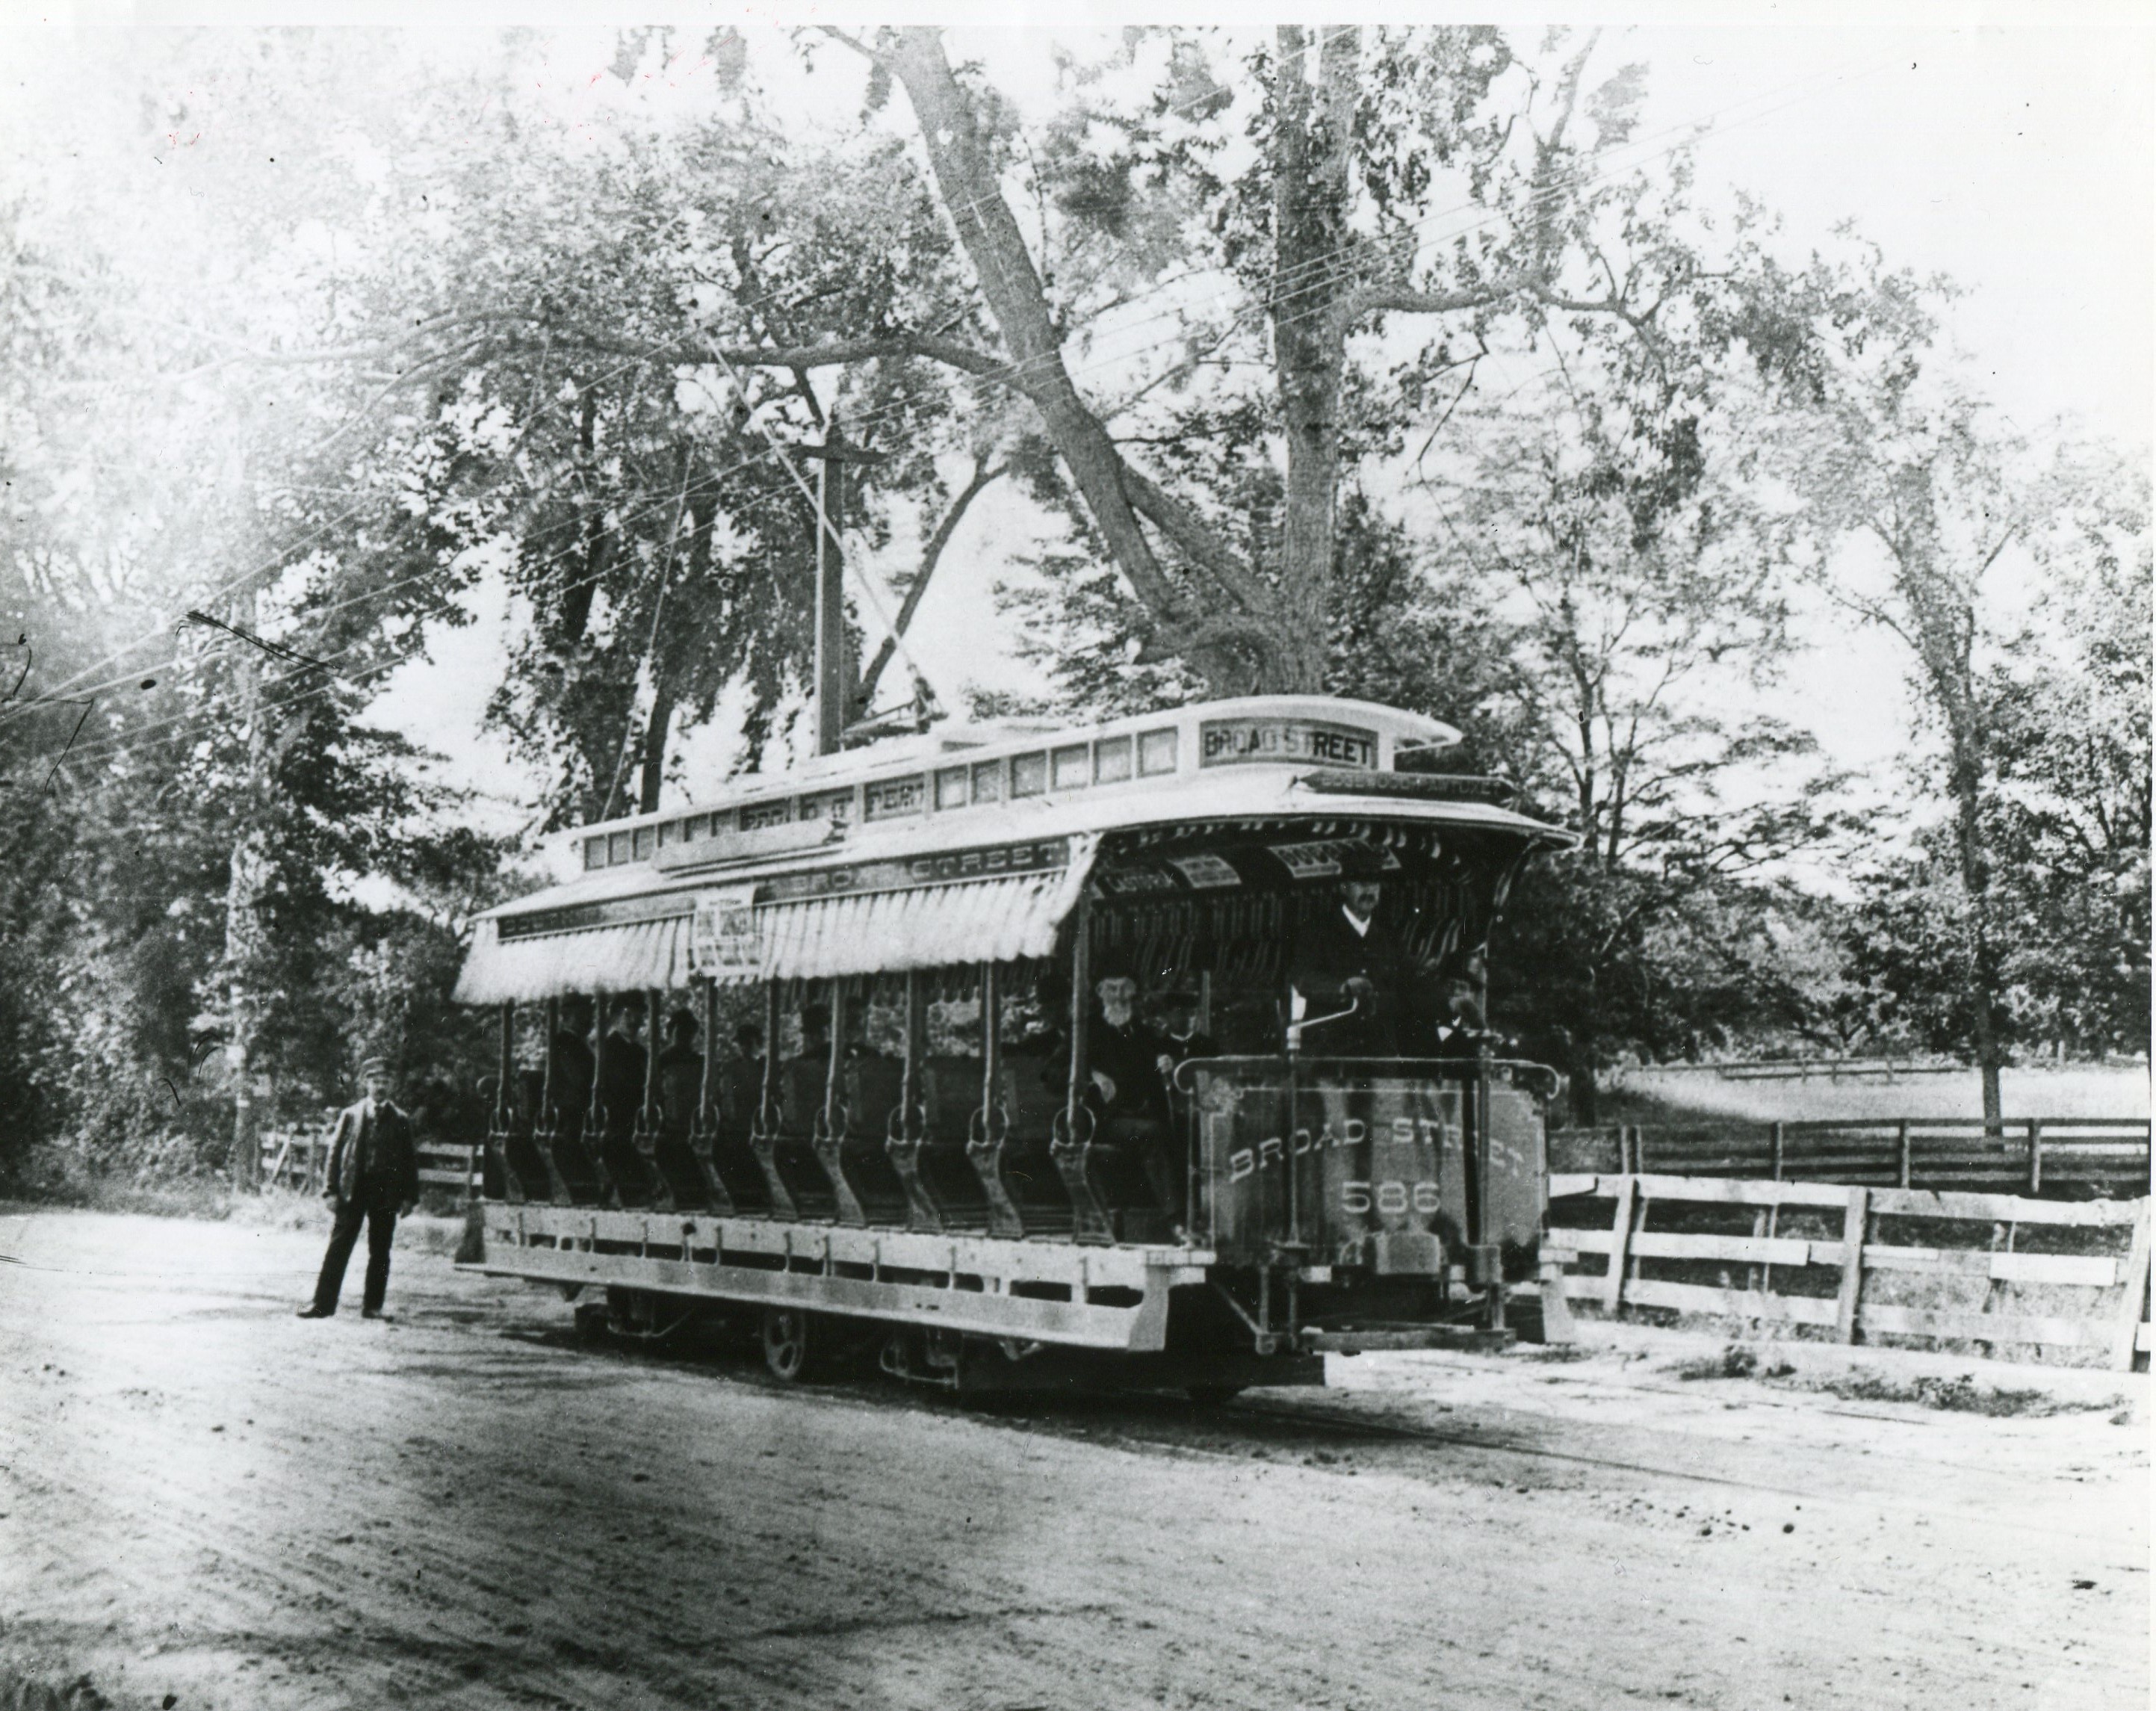 broad-street-trolley-ri-historical-society-photo